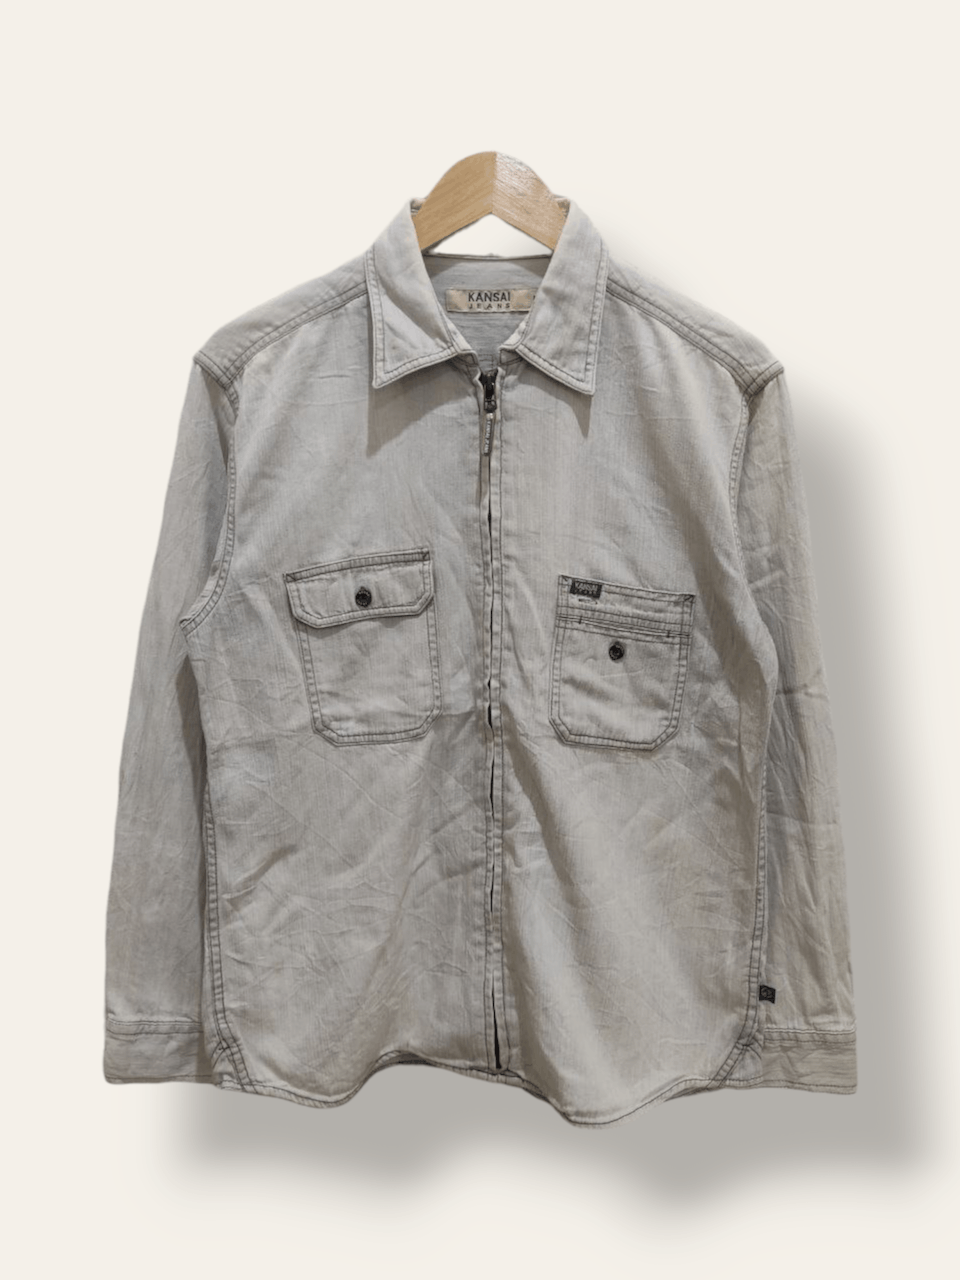 Vintage Kansai Jeans by Kansai Yamamoto Denim Zipper Jacket - 1